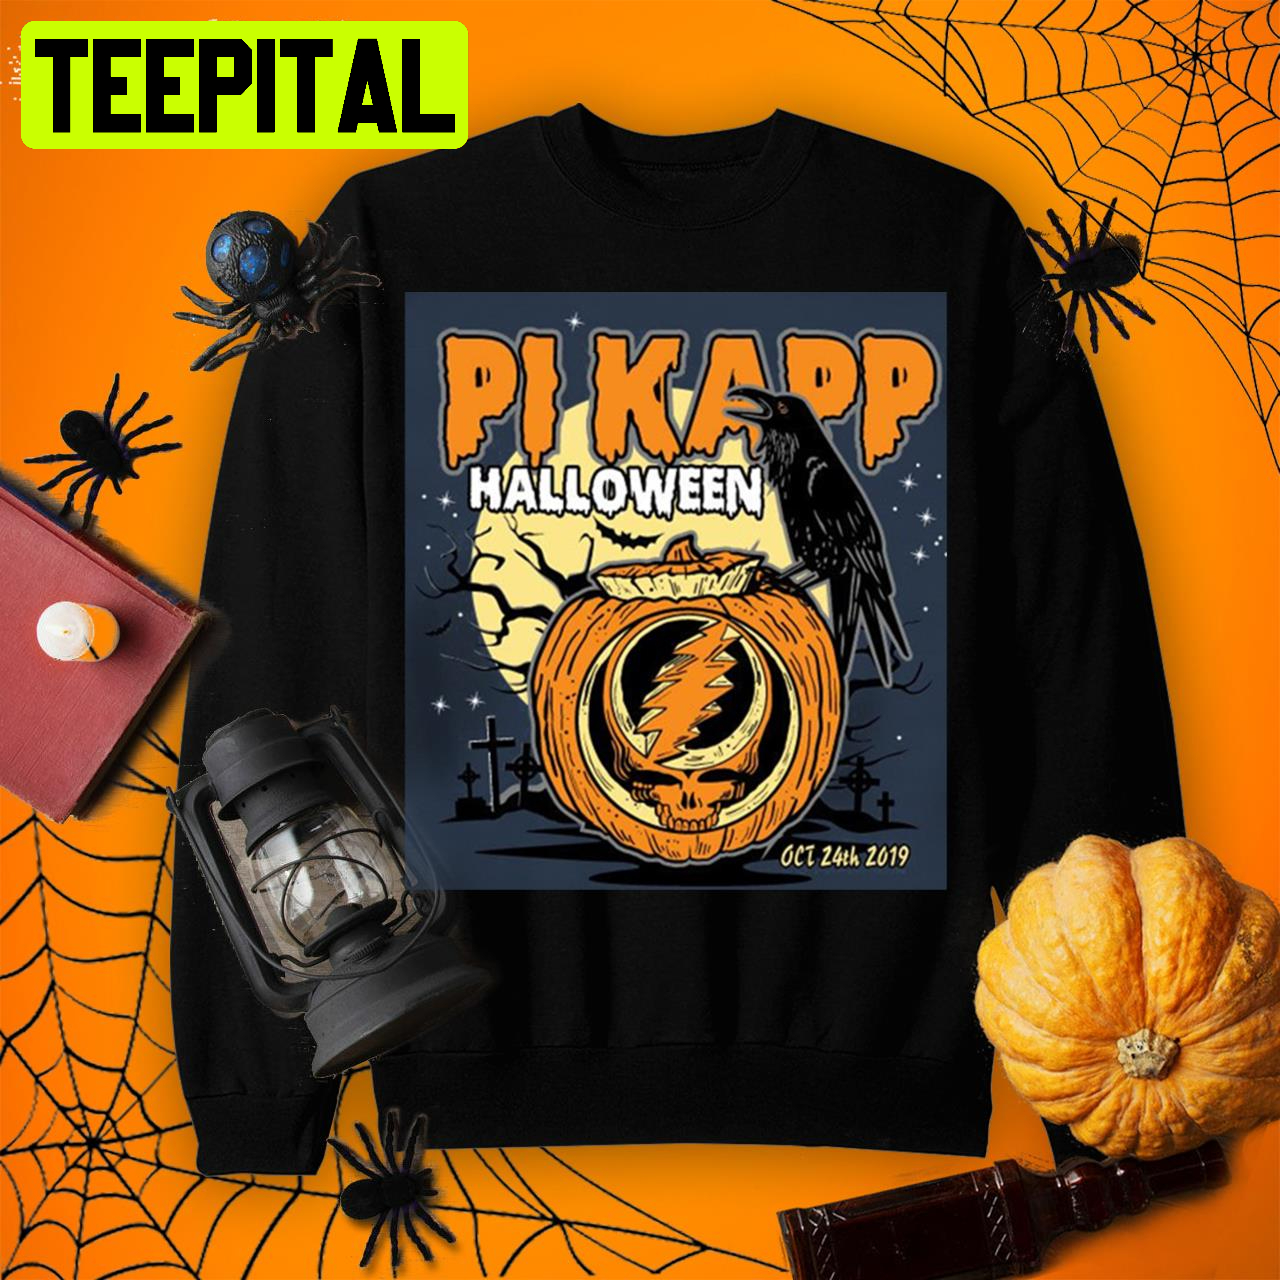 879 Pi Kappa Grateful Dead Cool Halloween Shirt